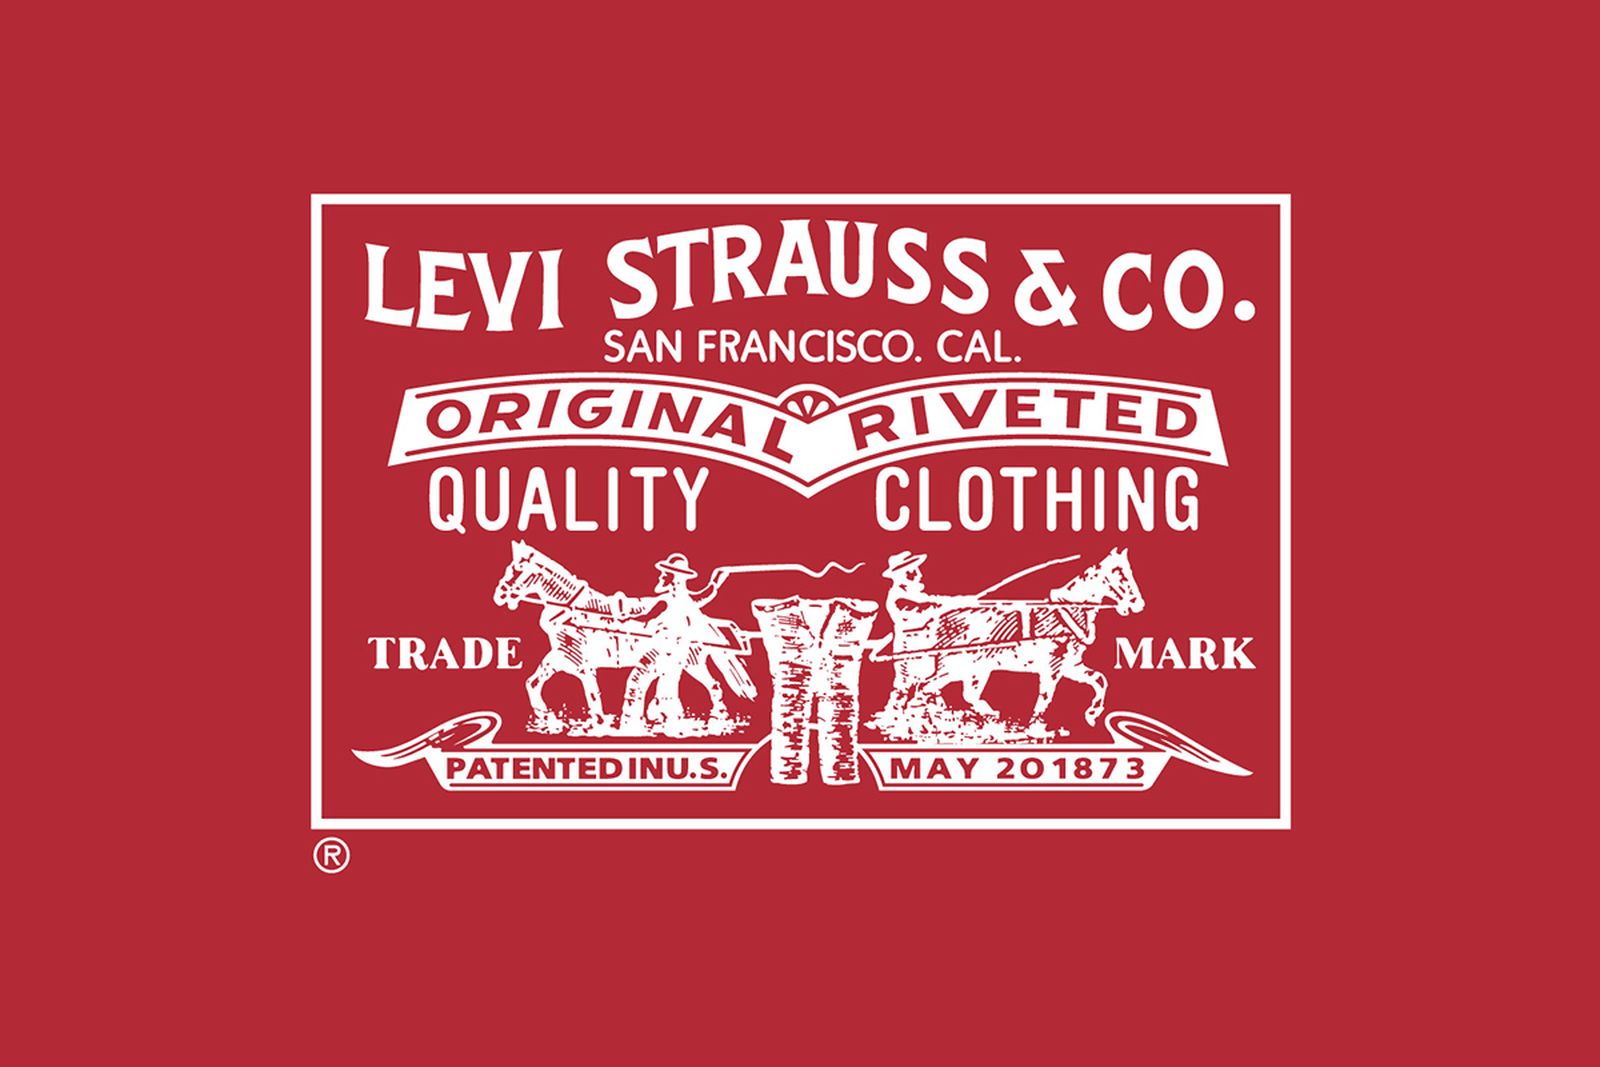 levis logo history Behind the Logo Levi's